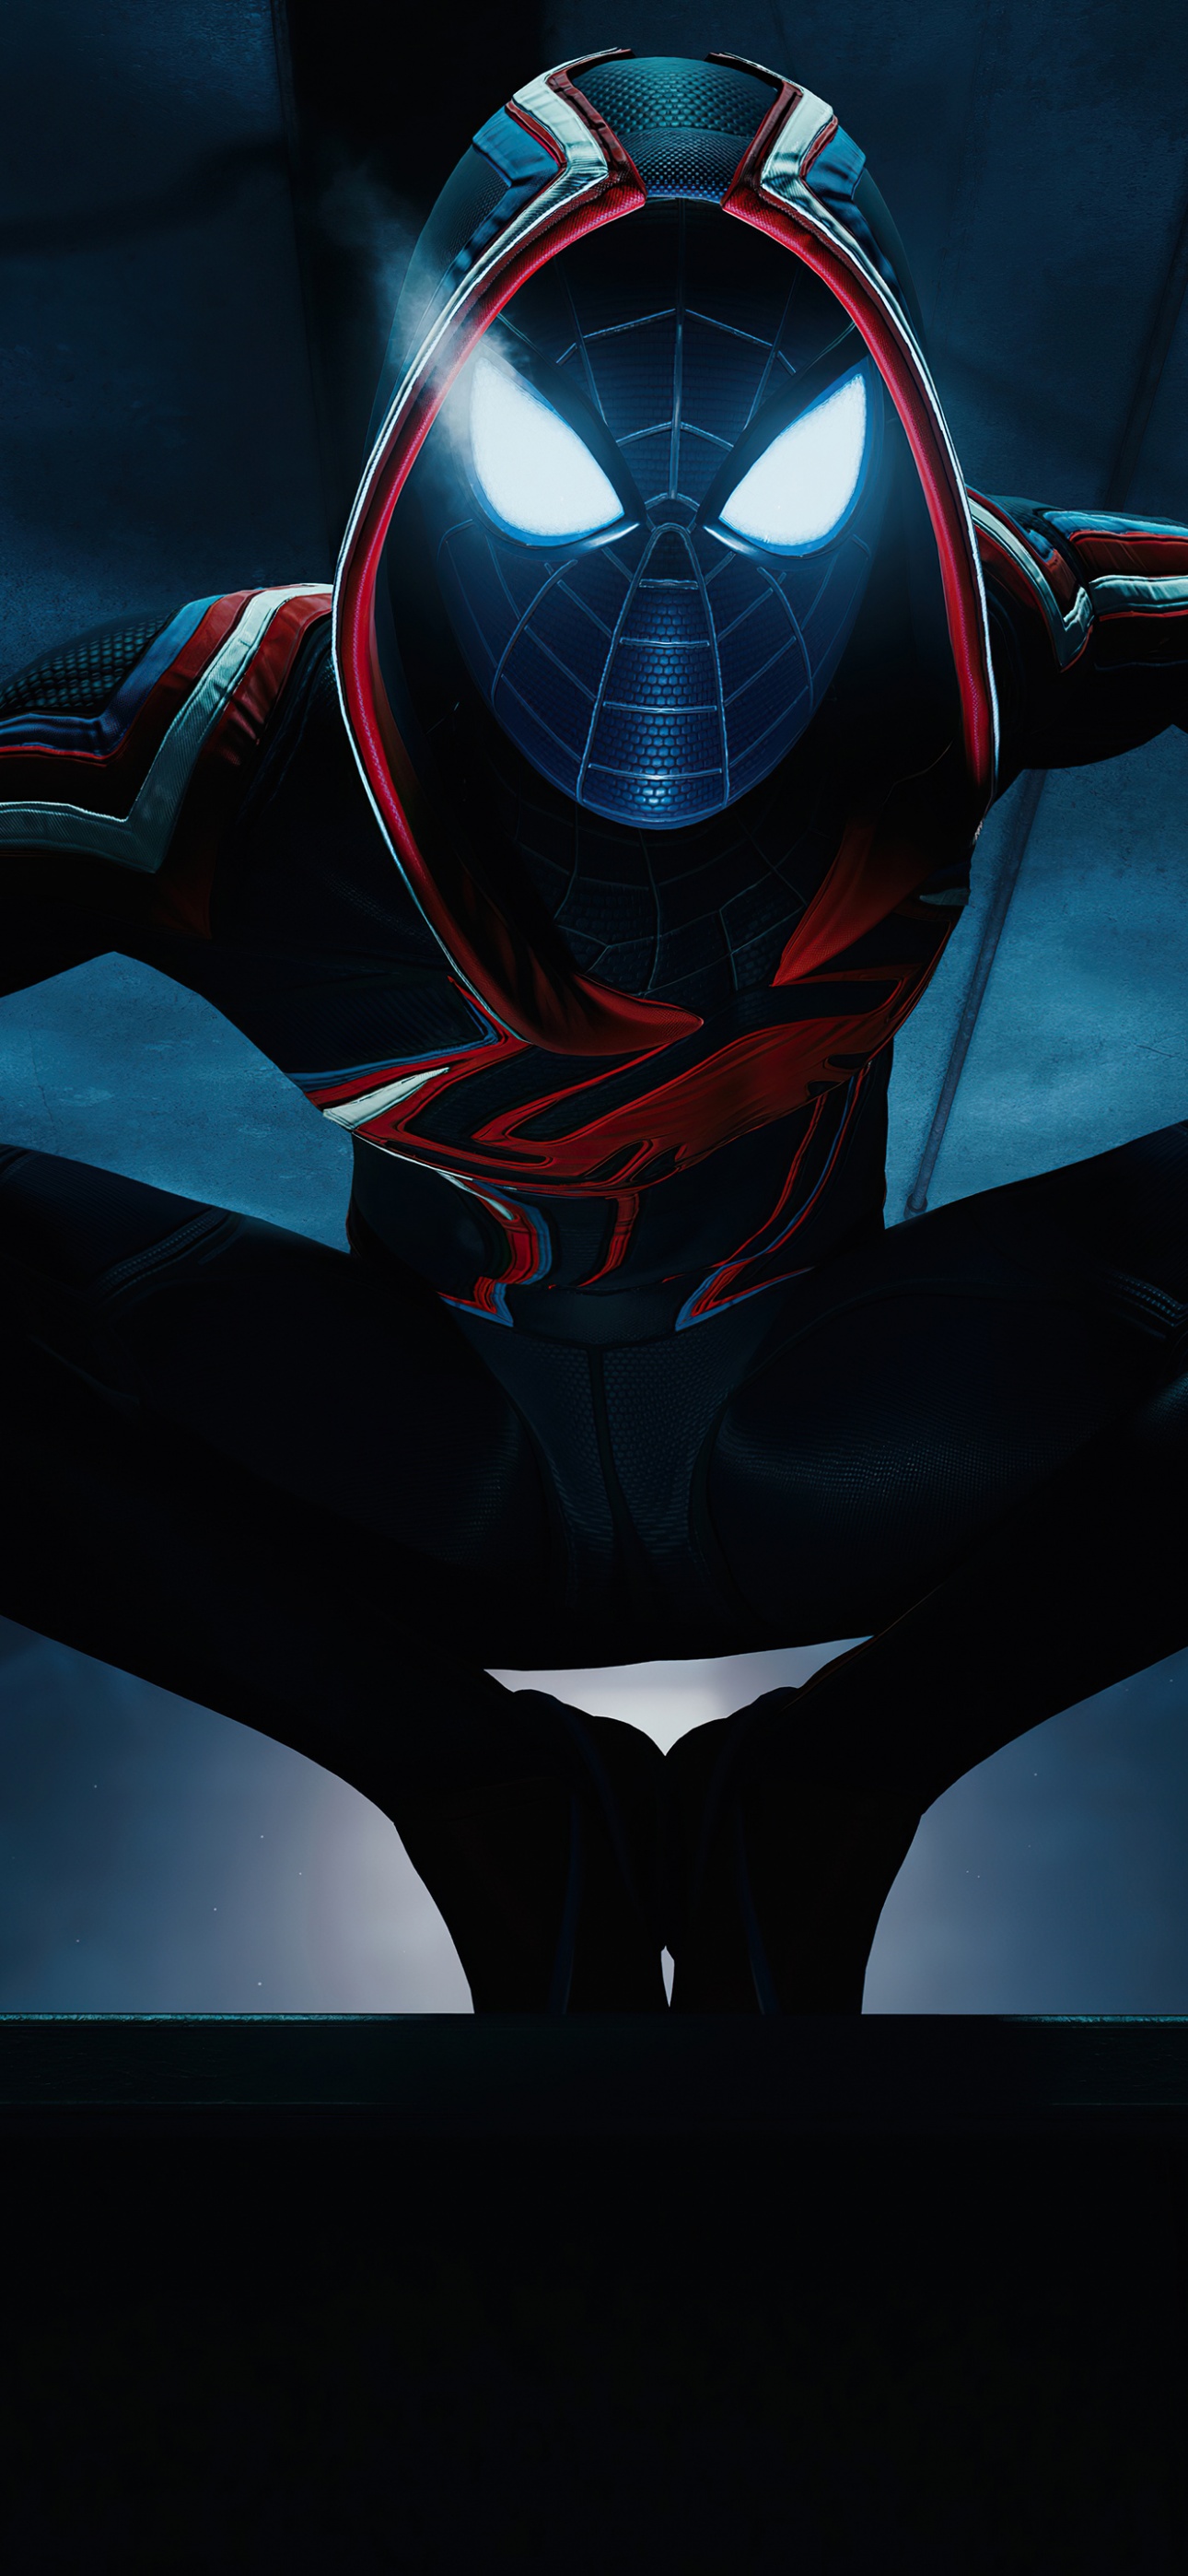 Marvel's Spider-Man: Miles Morales Wallpaper 4K, Photo mode, Games, #3444